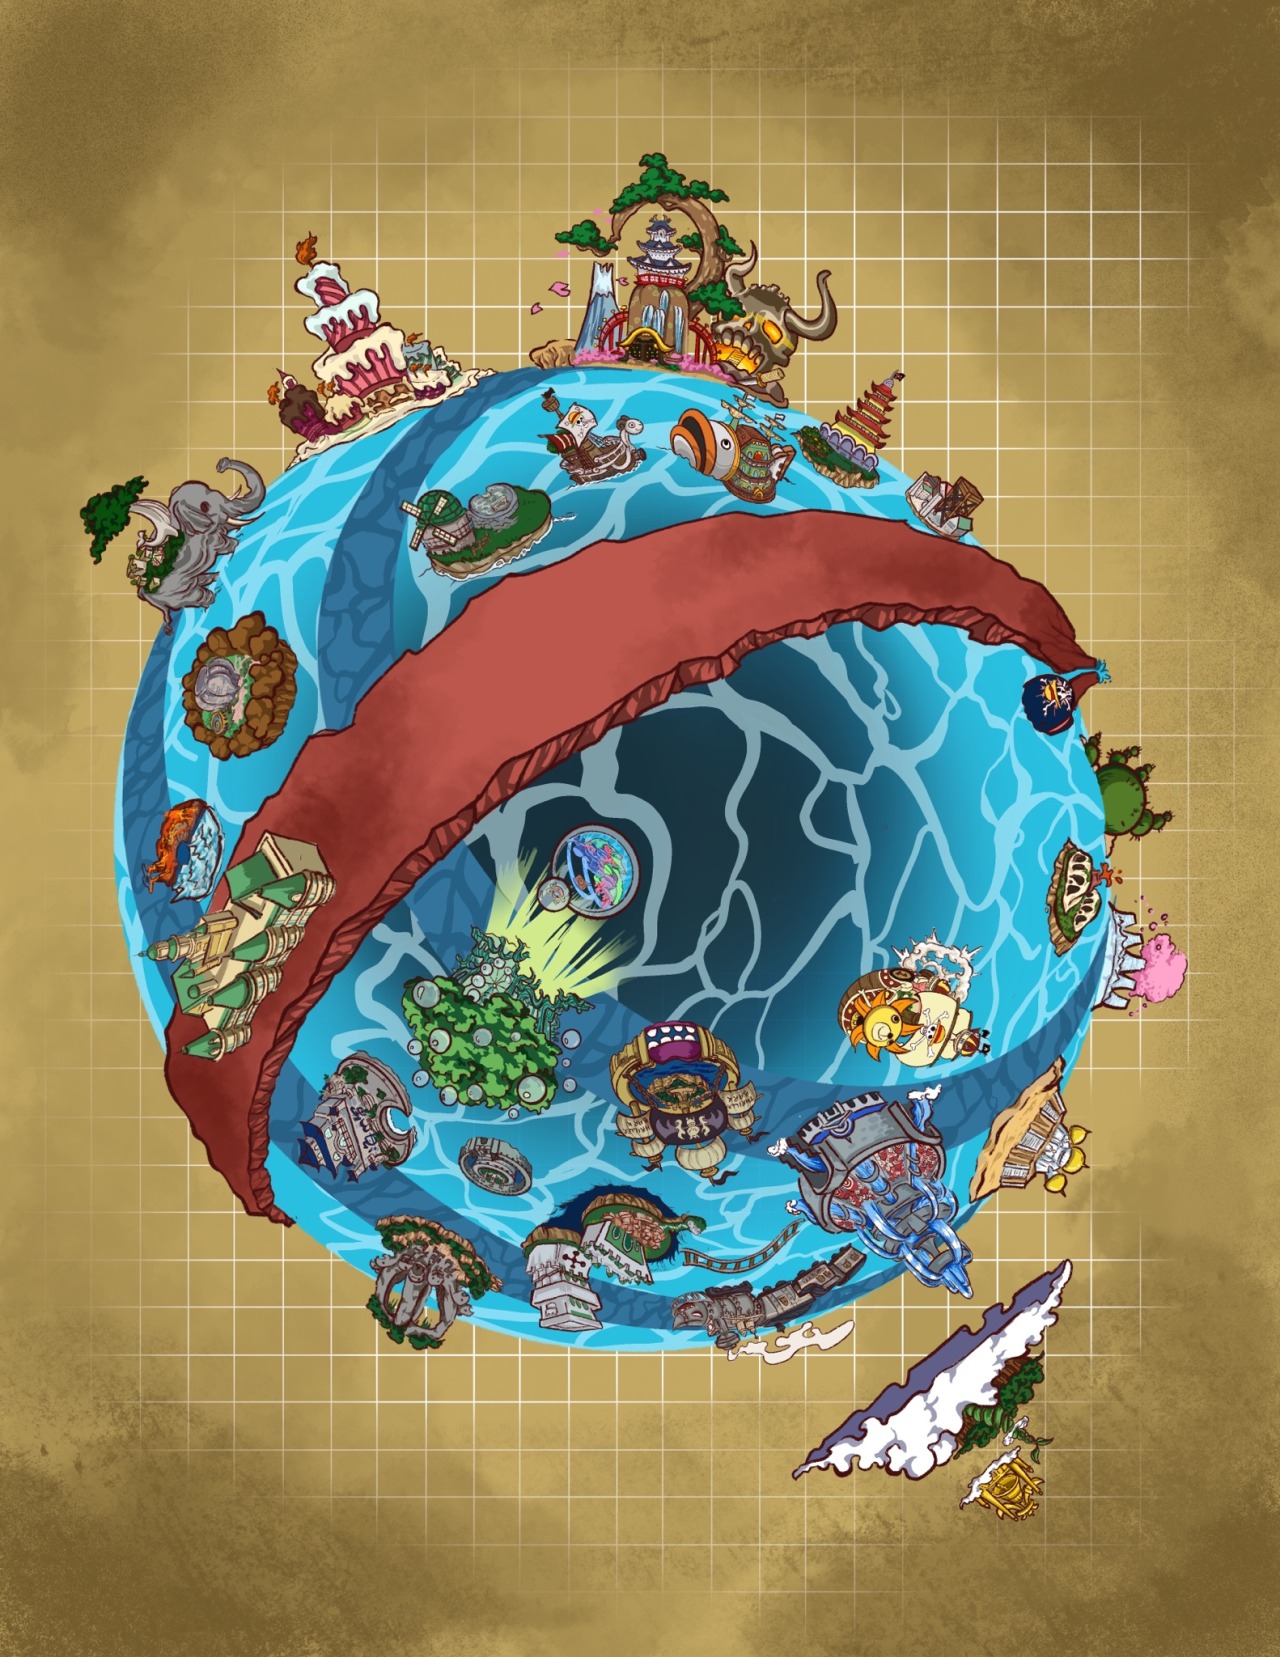 One Piece World Map 